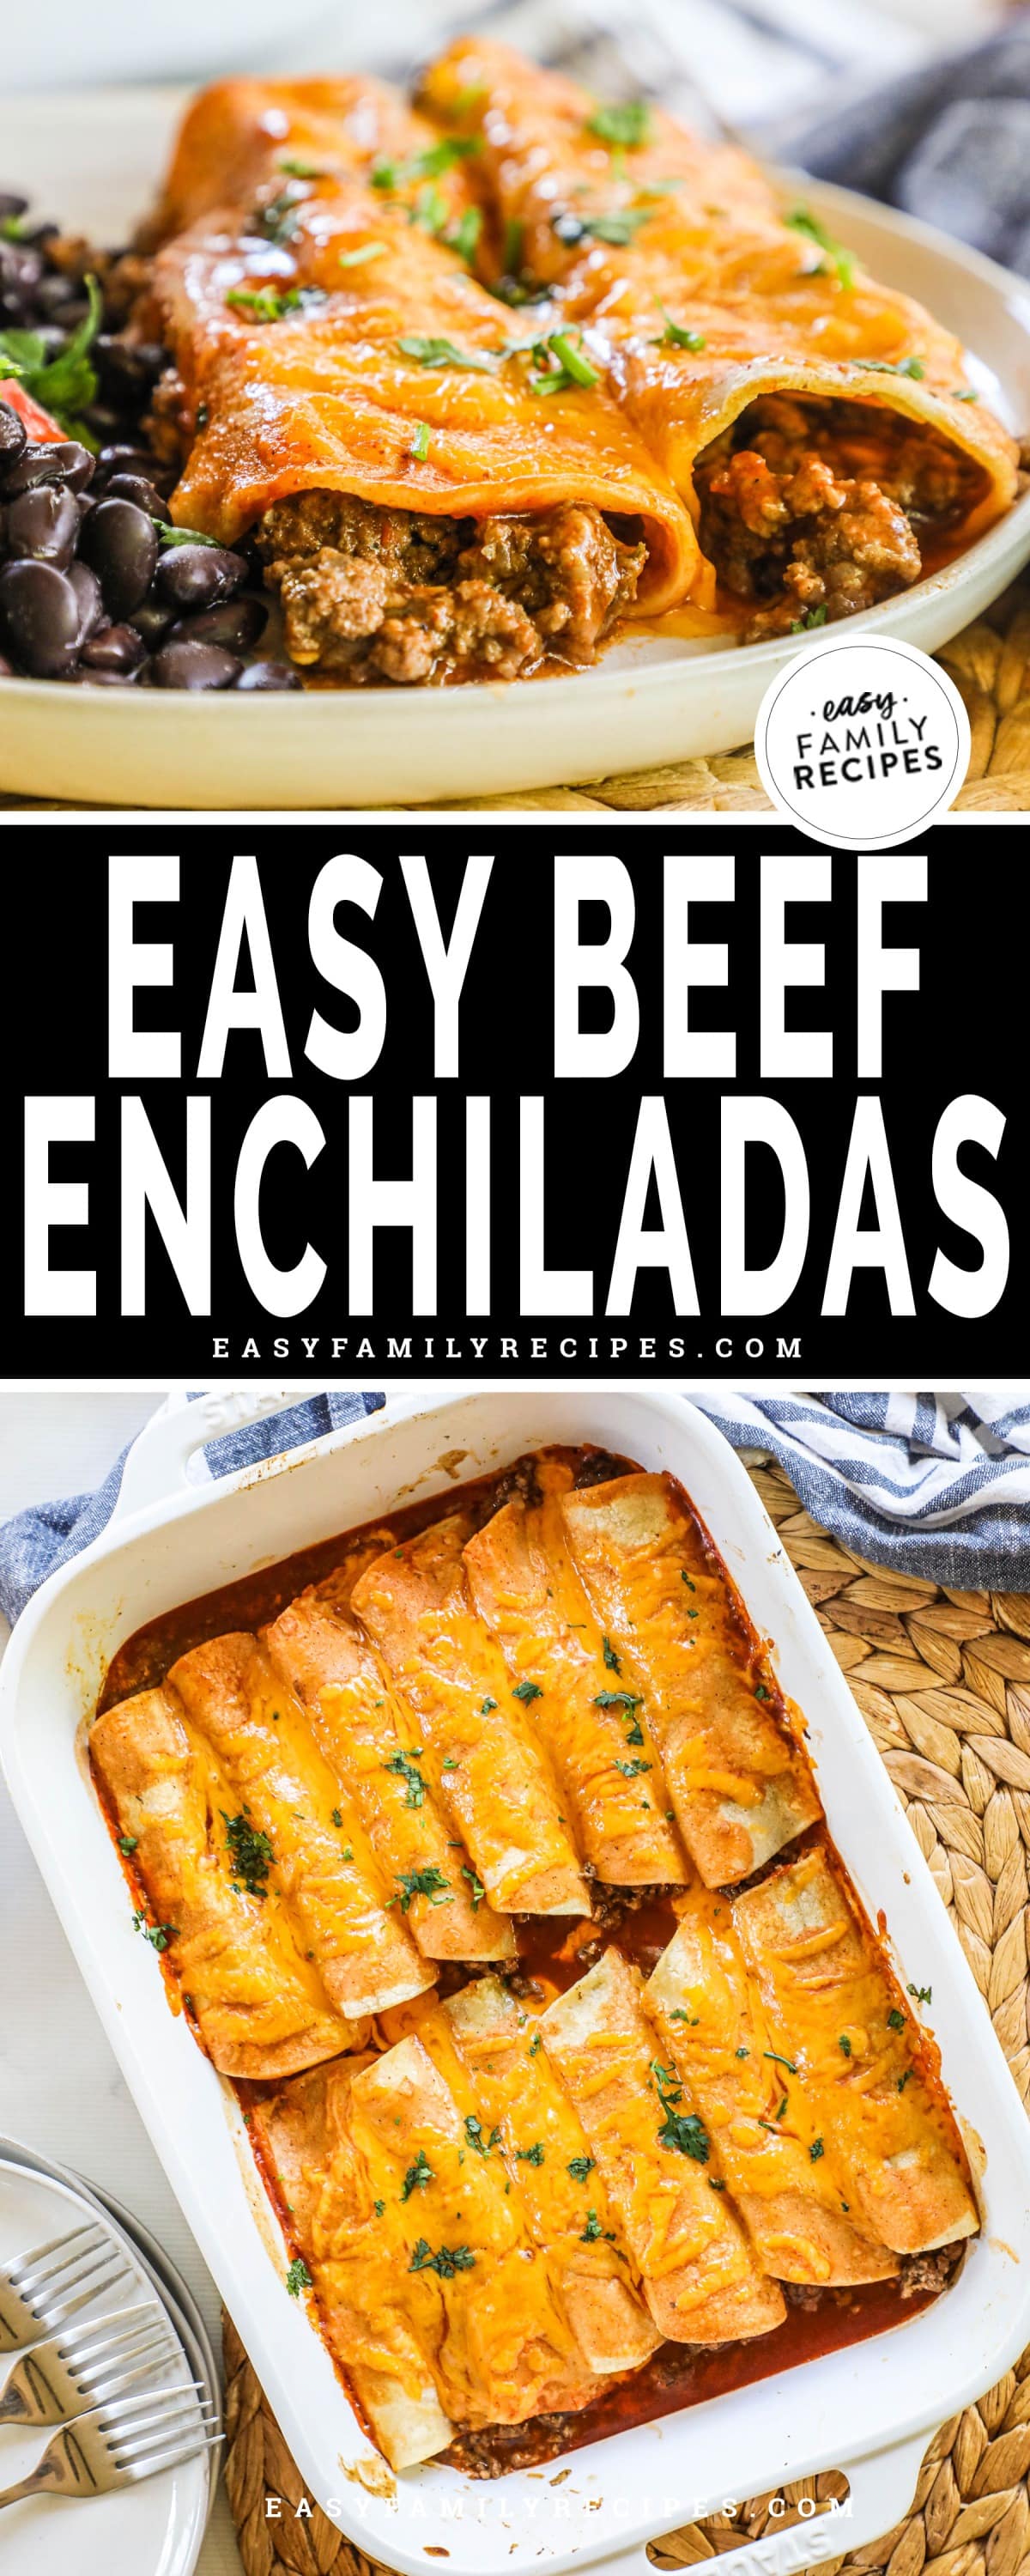 Top photo: beef enchiladas on plate; bottom photo: beef enchiladas in baking dish